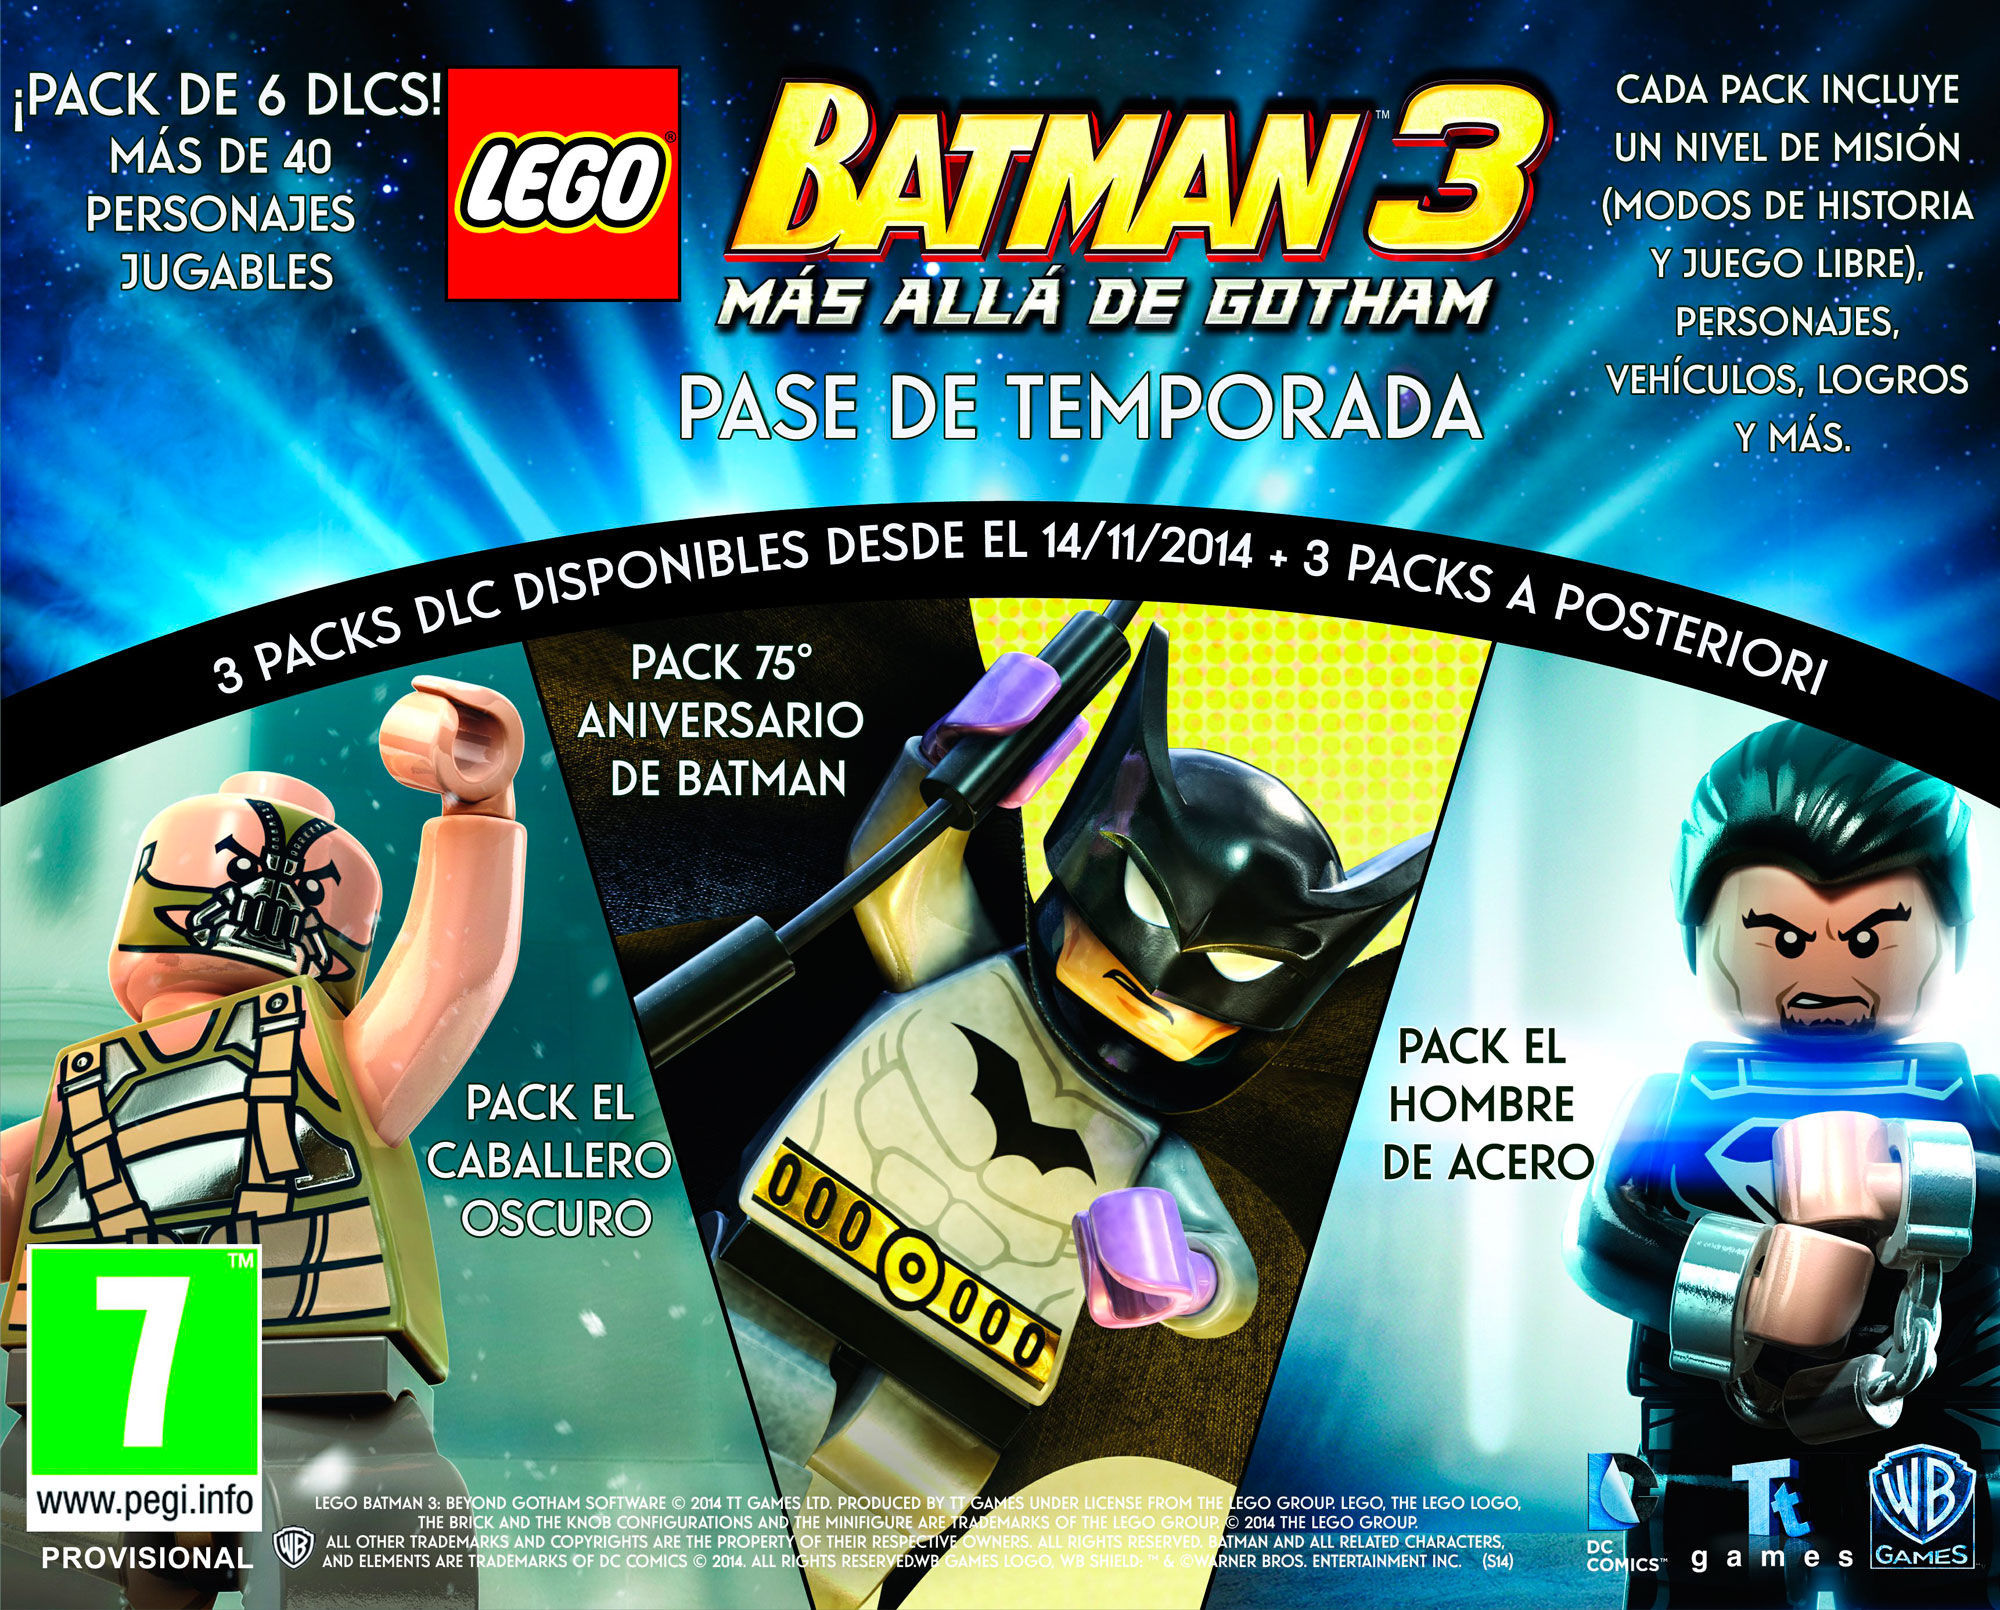 LEGO Batman 3: Más Allá de Gotham anuncia Pase de temporada